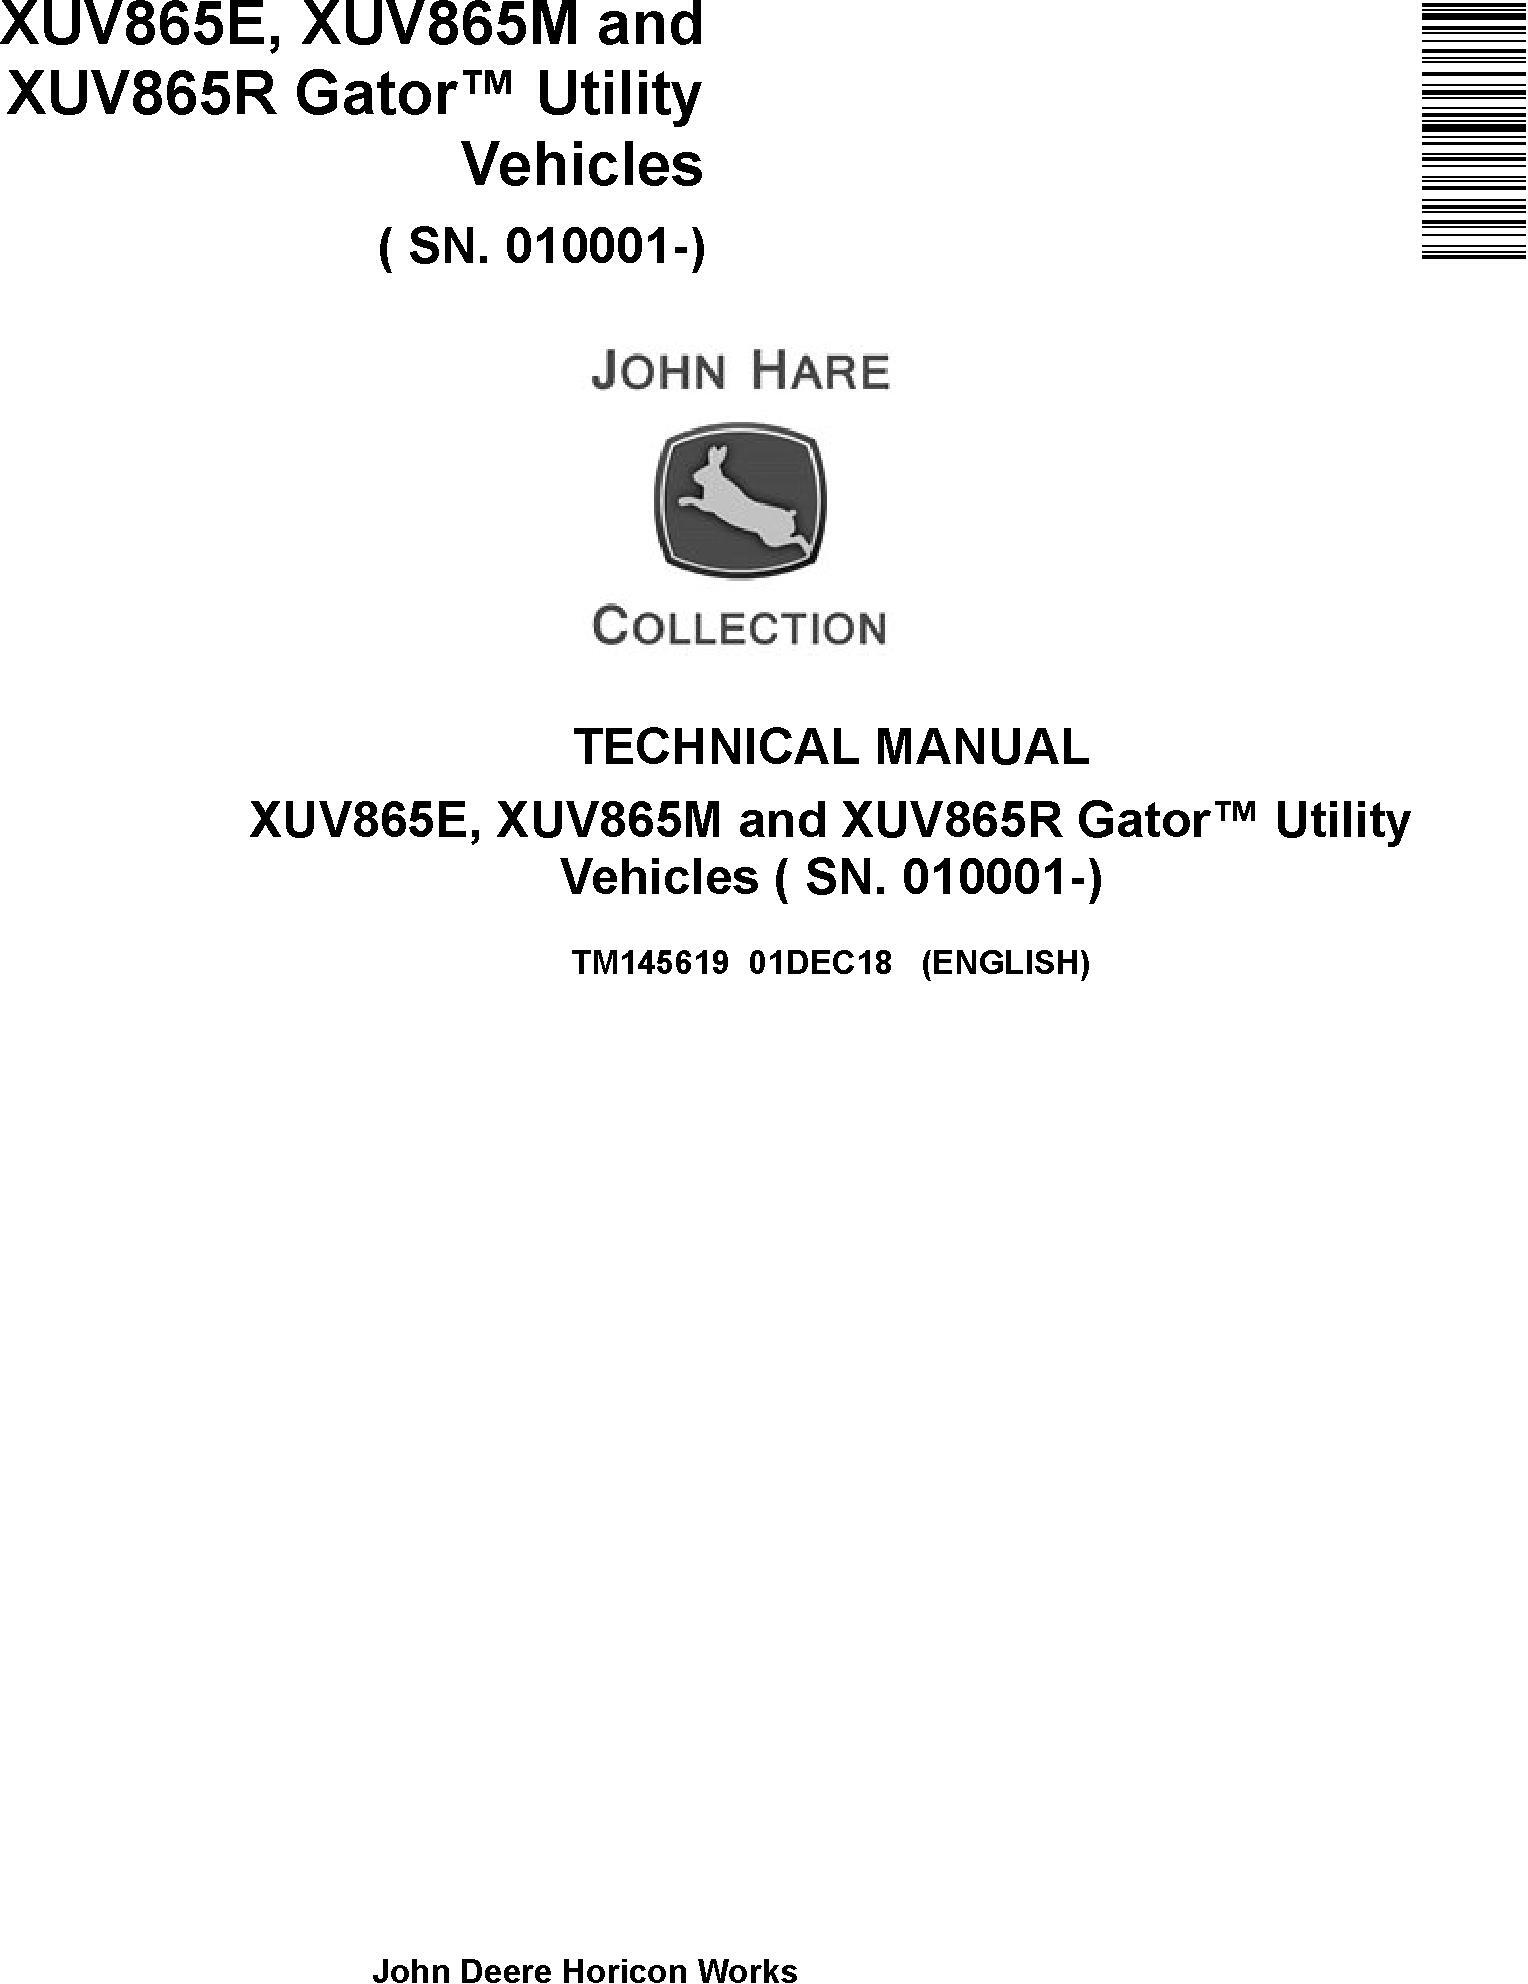 John Deere XUV865E XUV865M XUV865R Gator Utility Vehicles Technical Manual TM145619